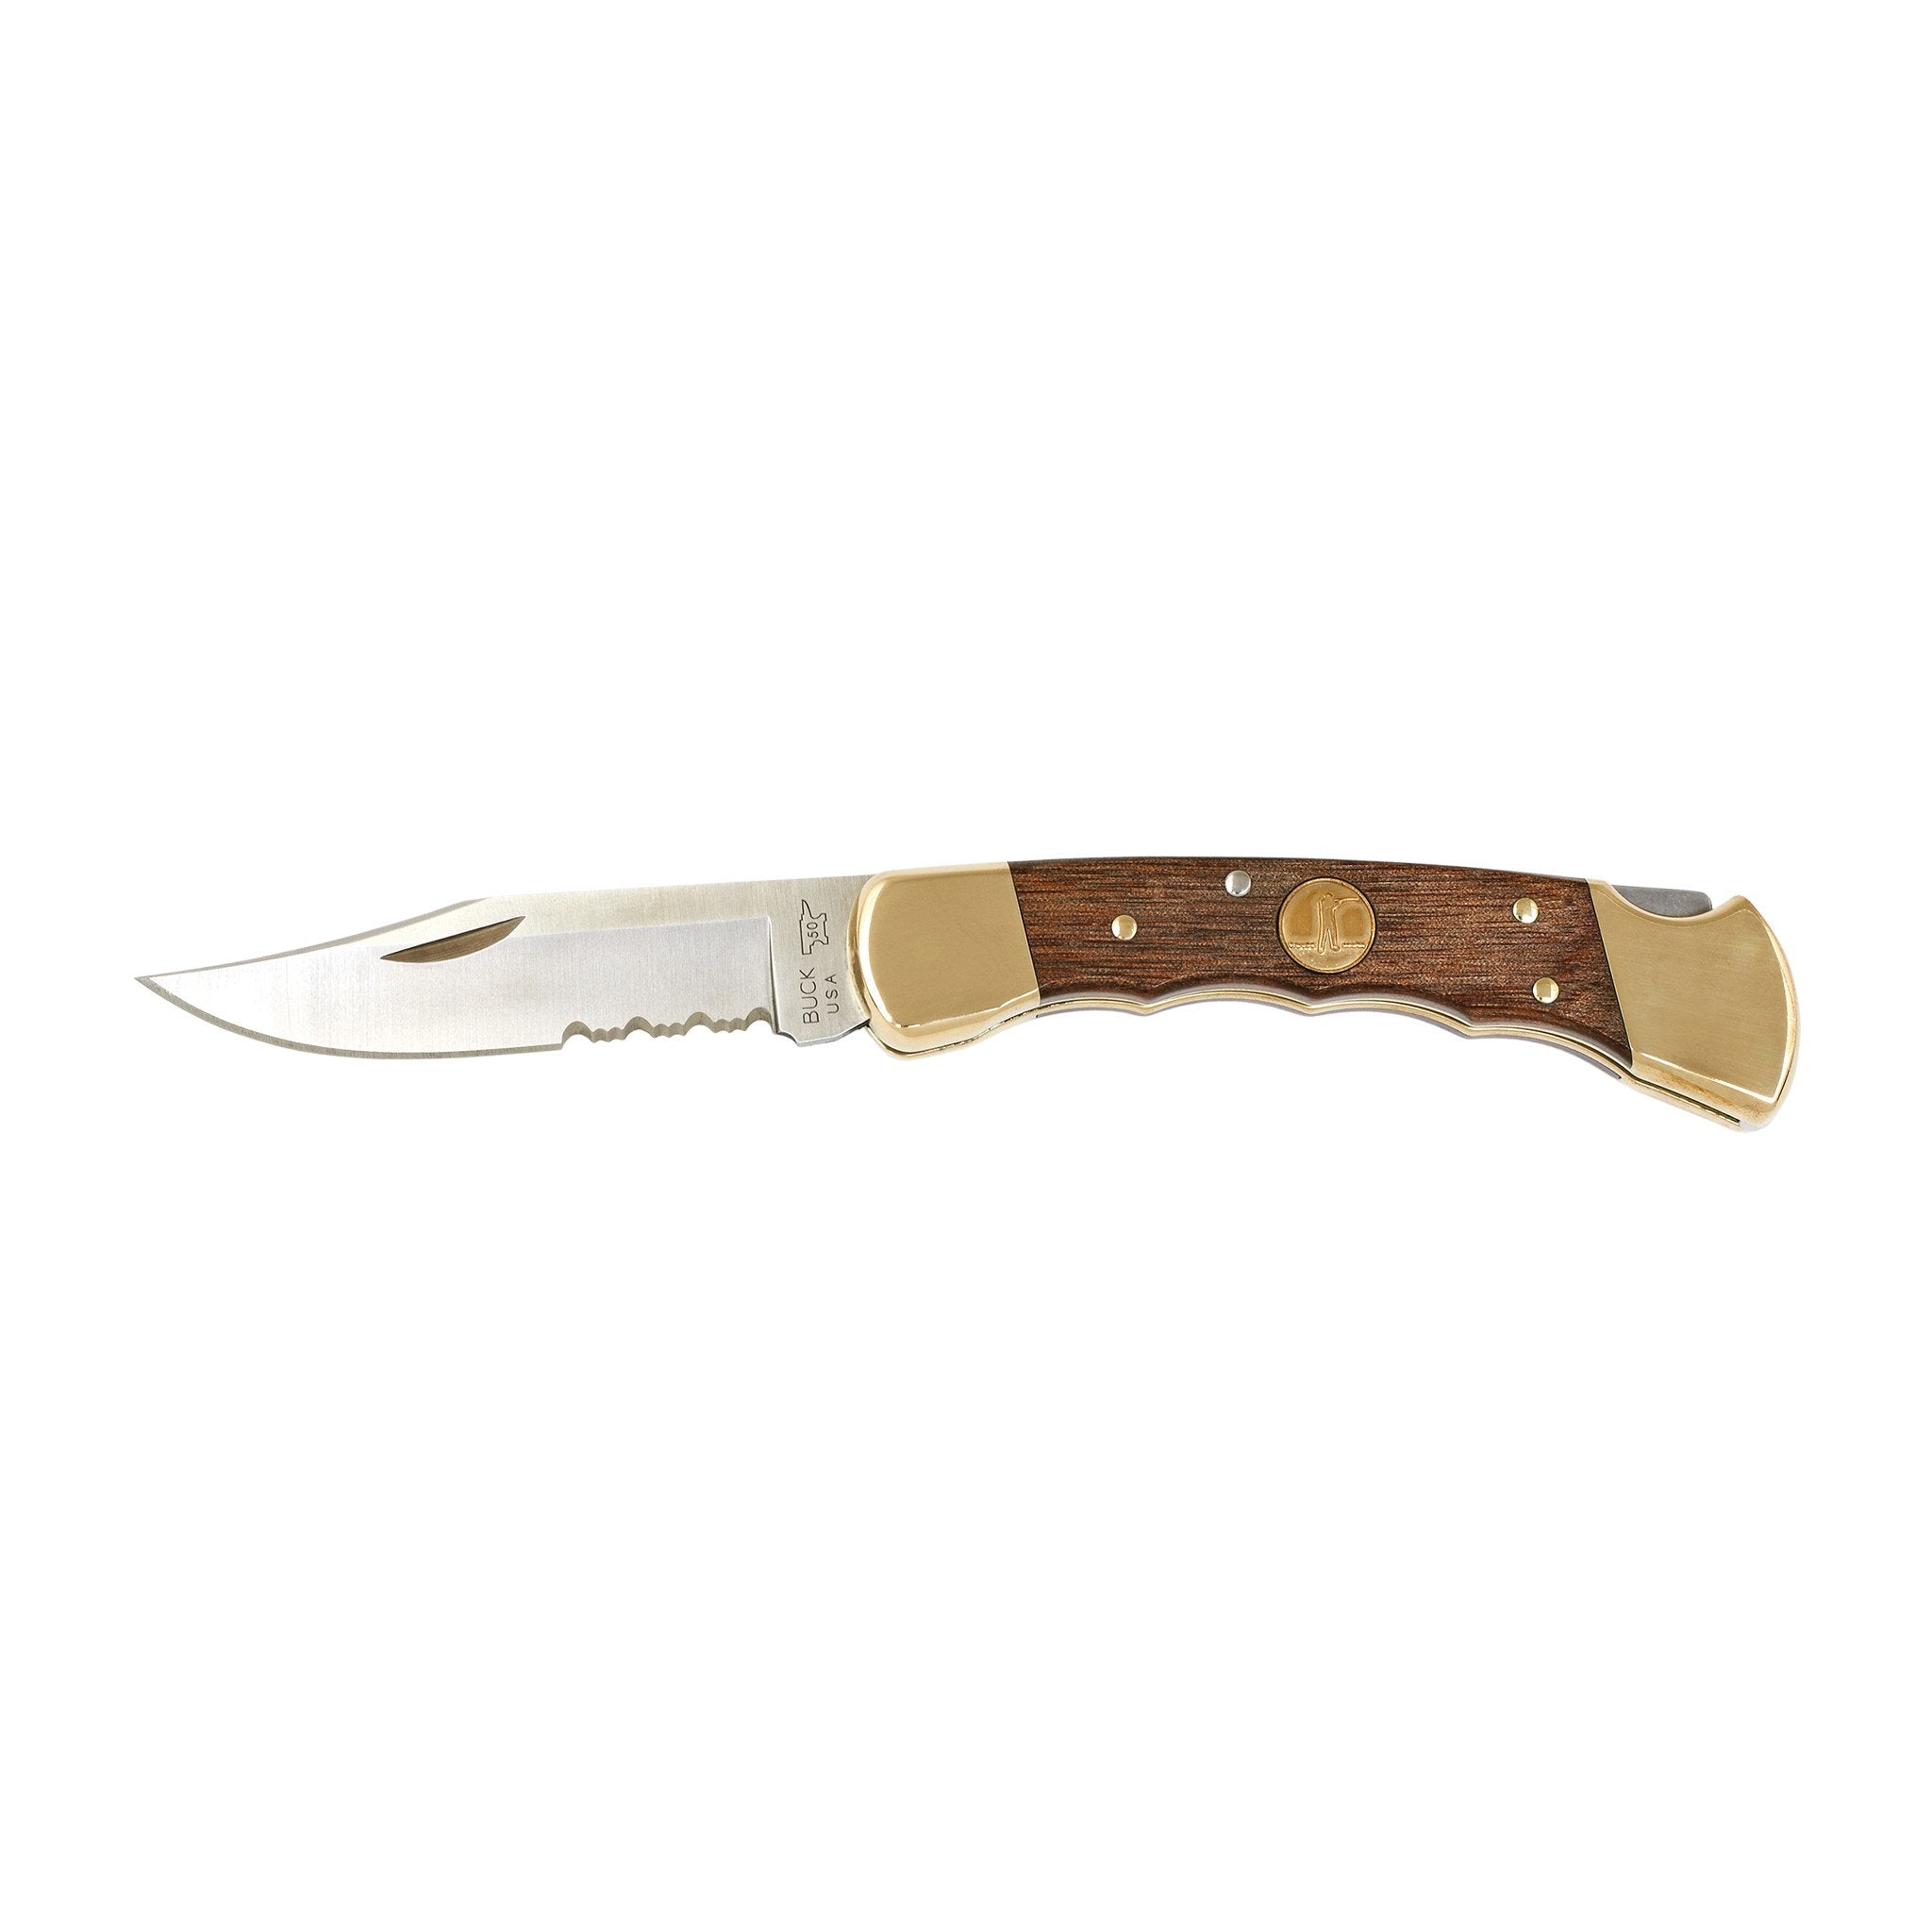 The Folding Hunter Knife, Heritage Walnut